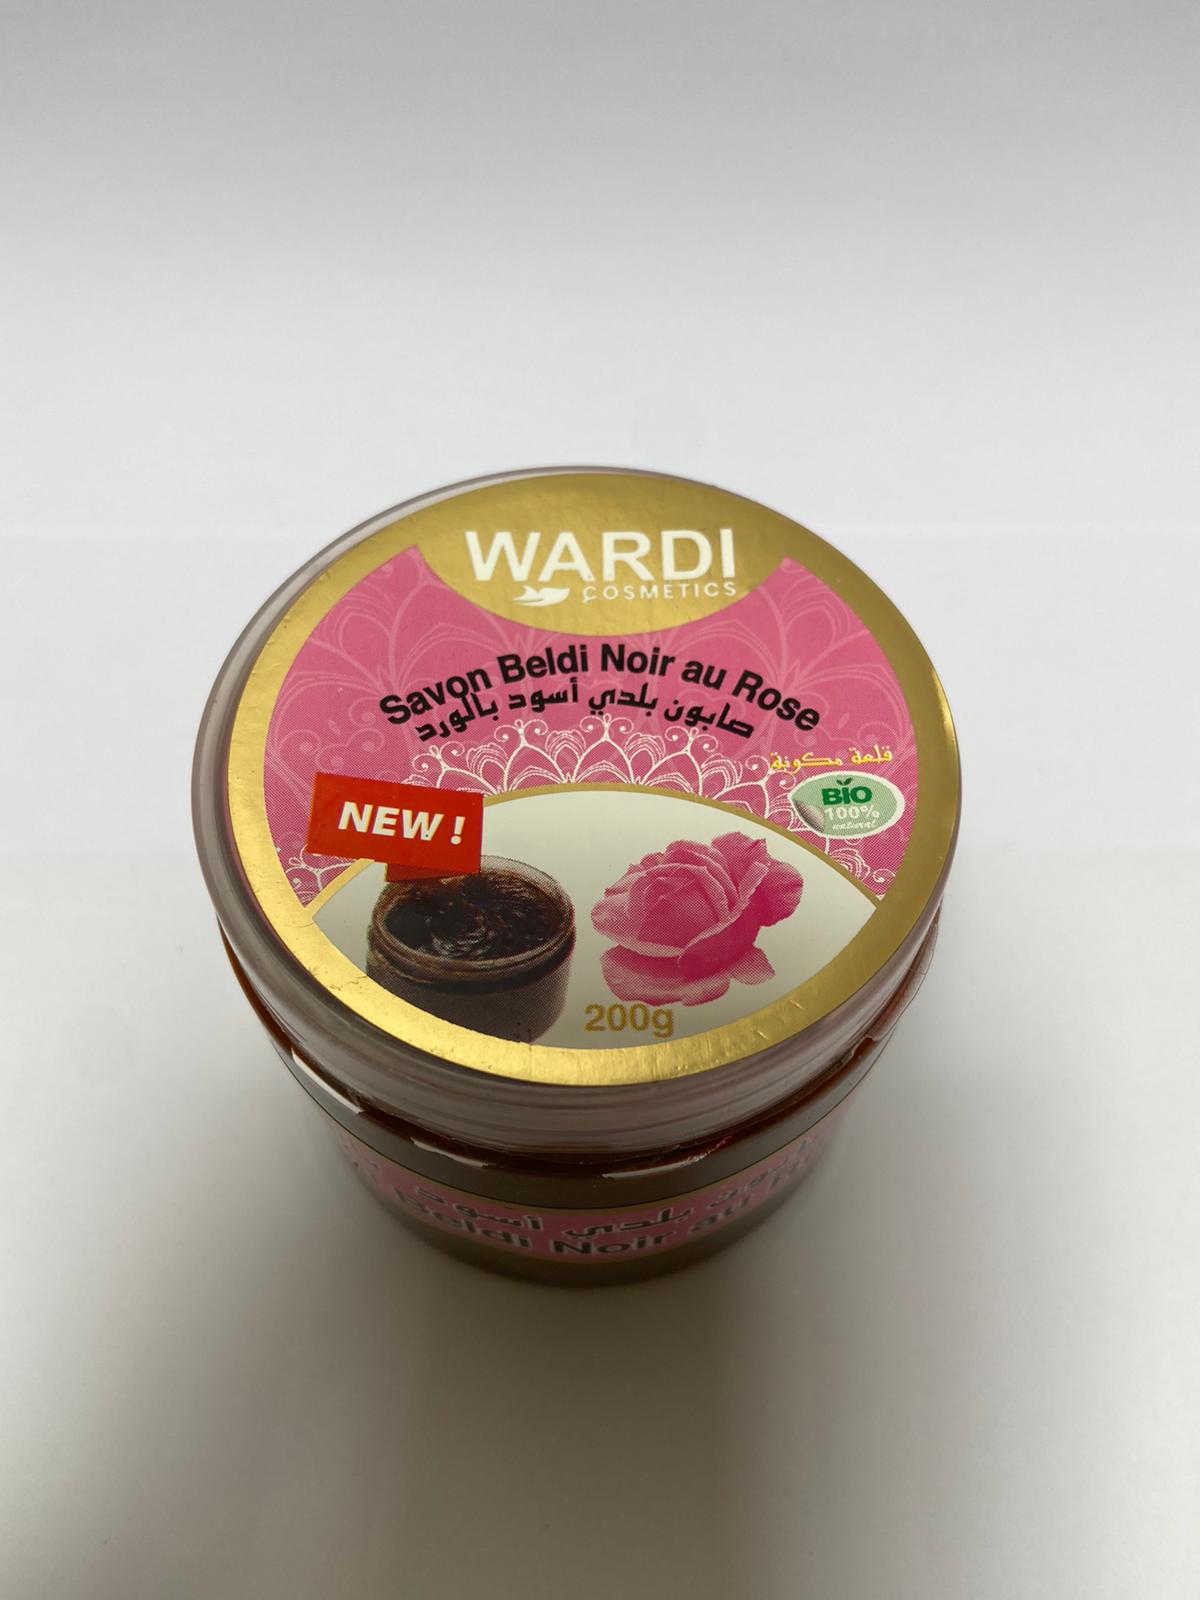 WARDI Cosmetics - Black beldi soap with rose - 200g - Wardi Cosmetics - Ethni Beauty Market